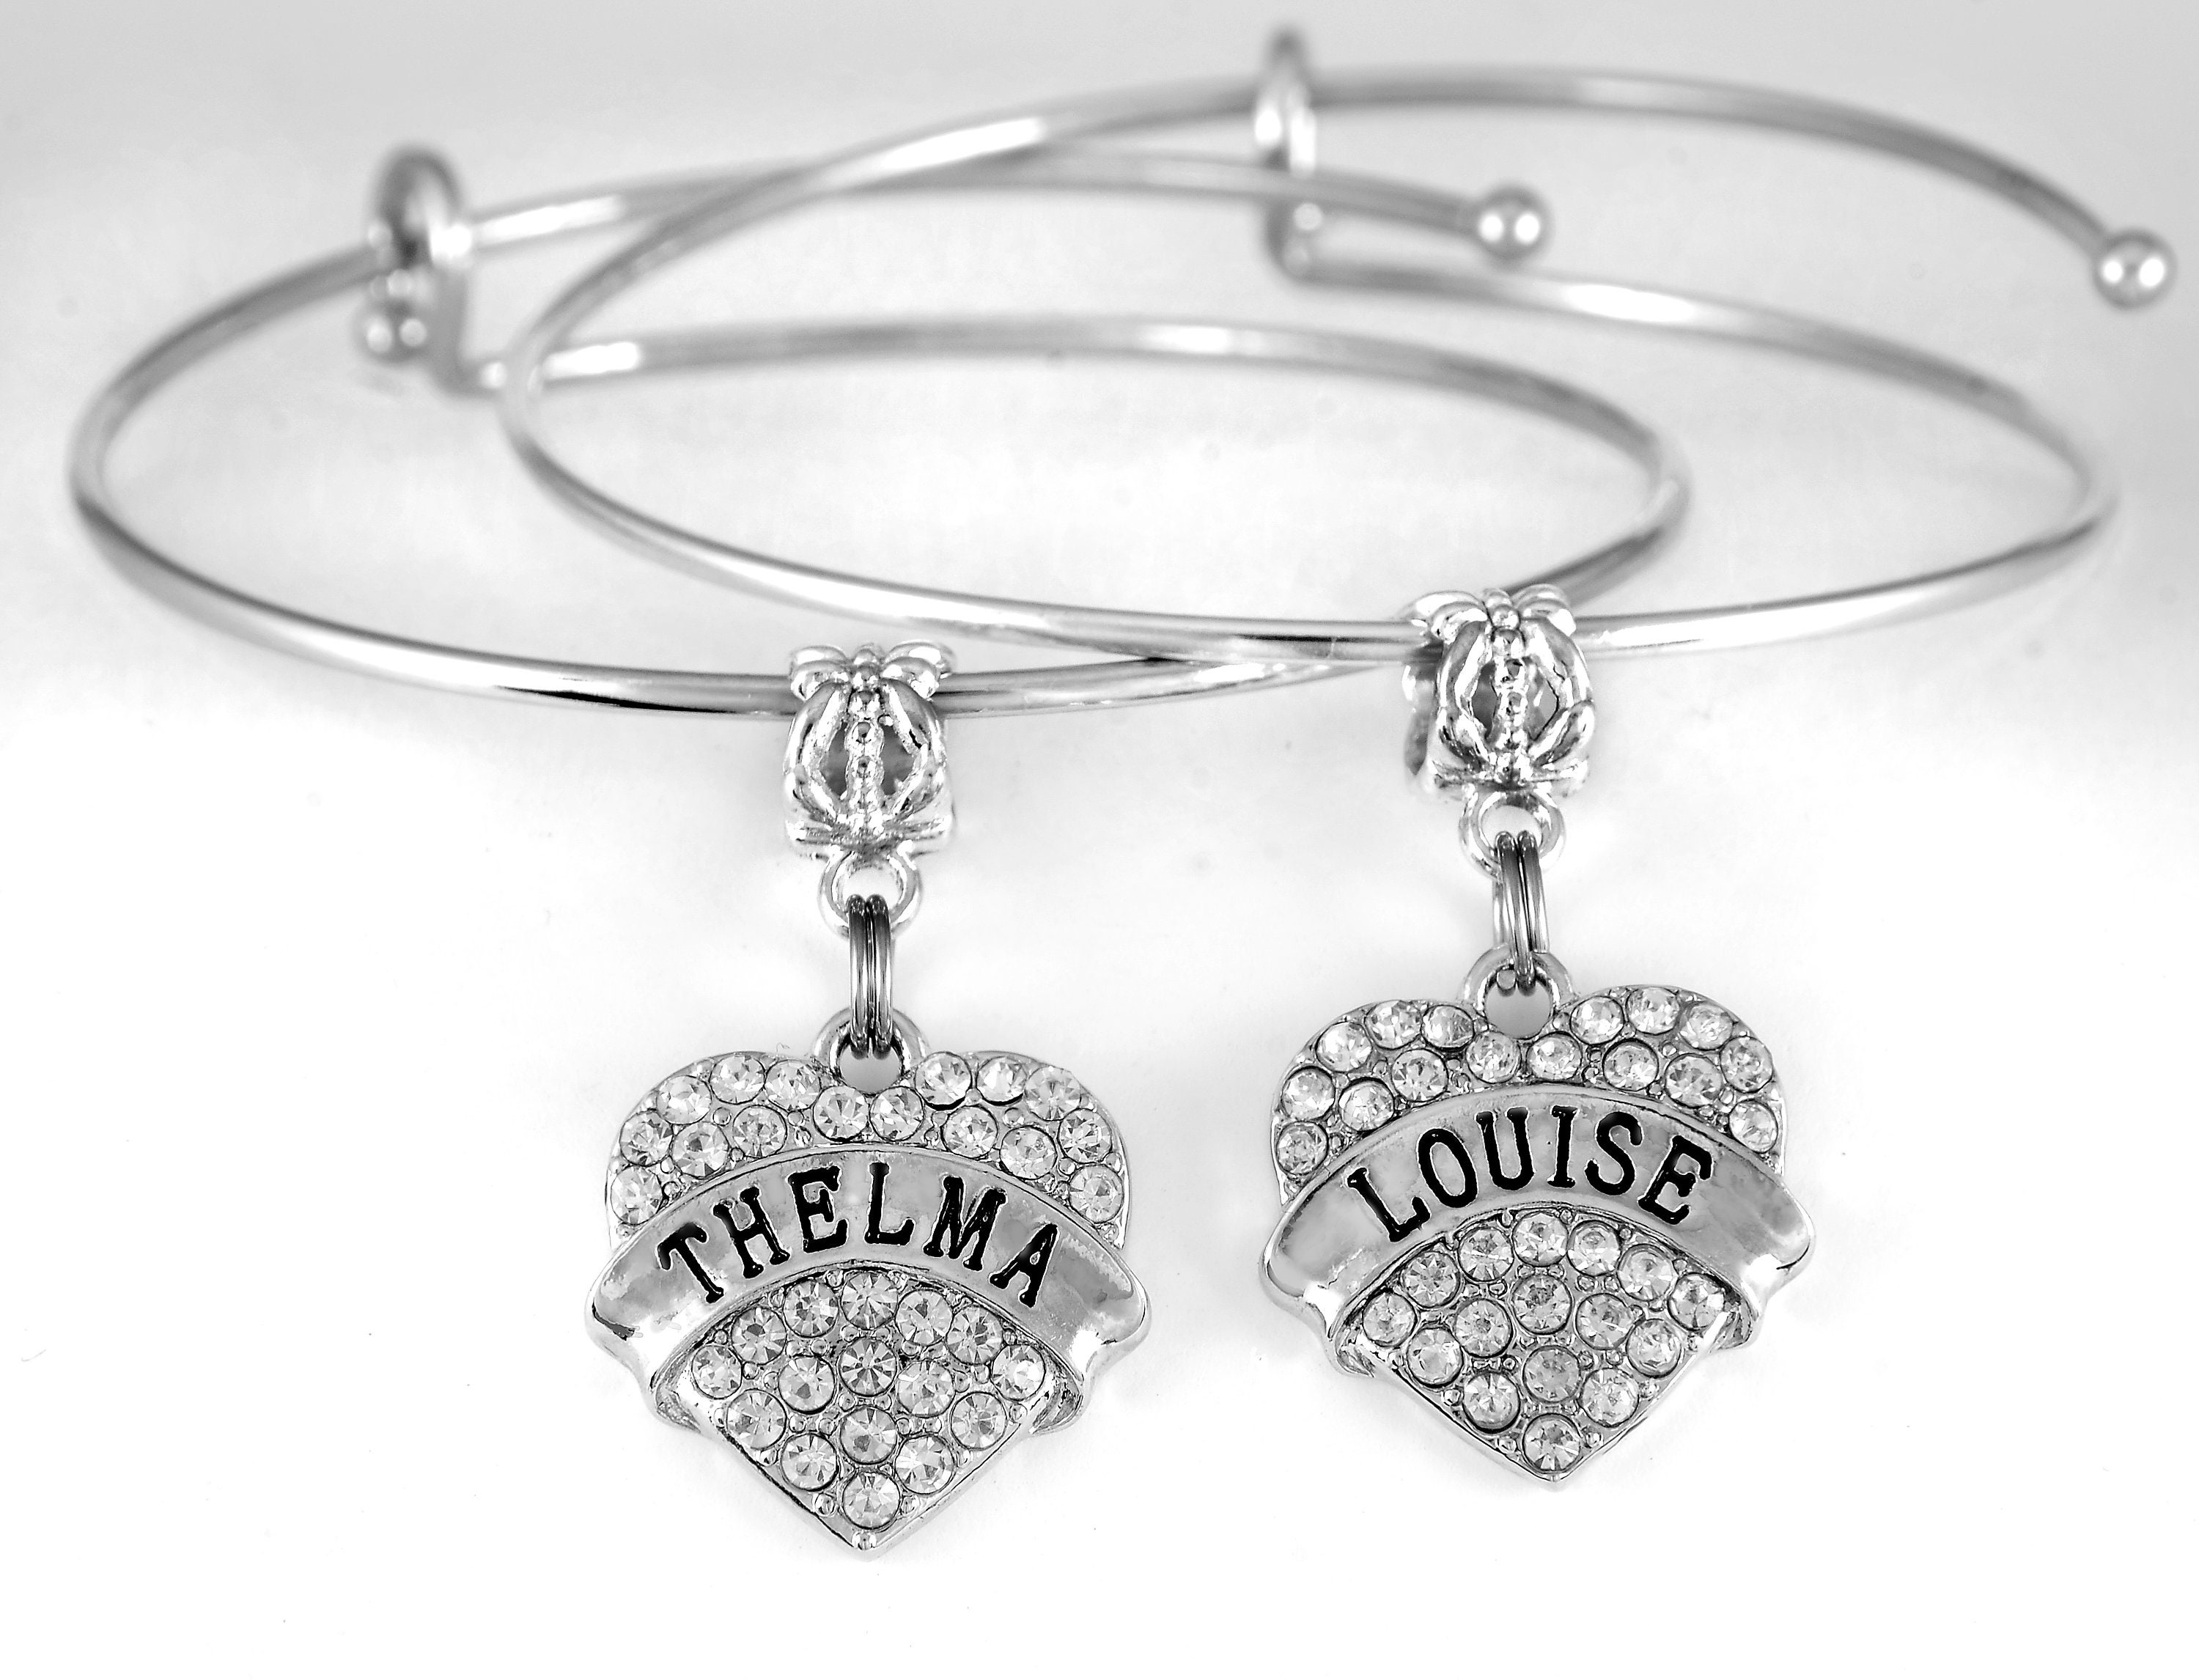 Thelma & Louise Friendship Bracelets